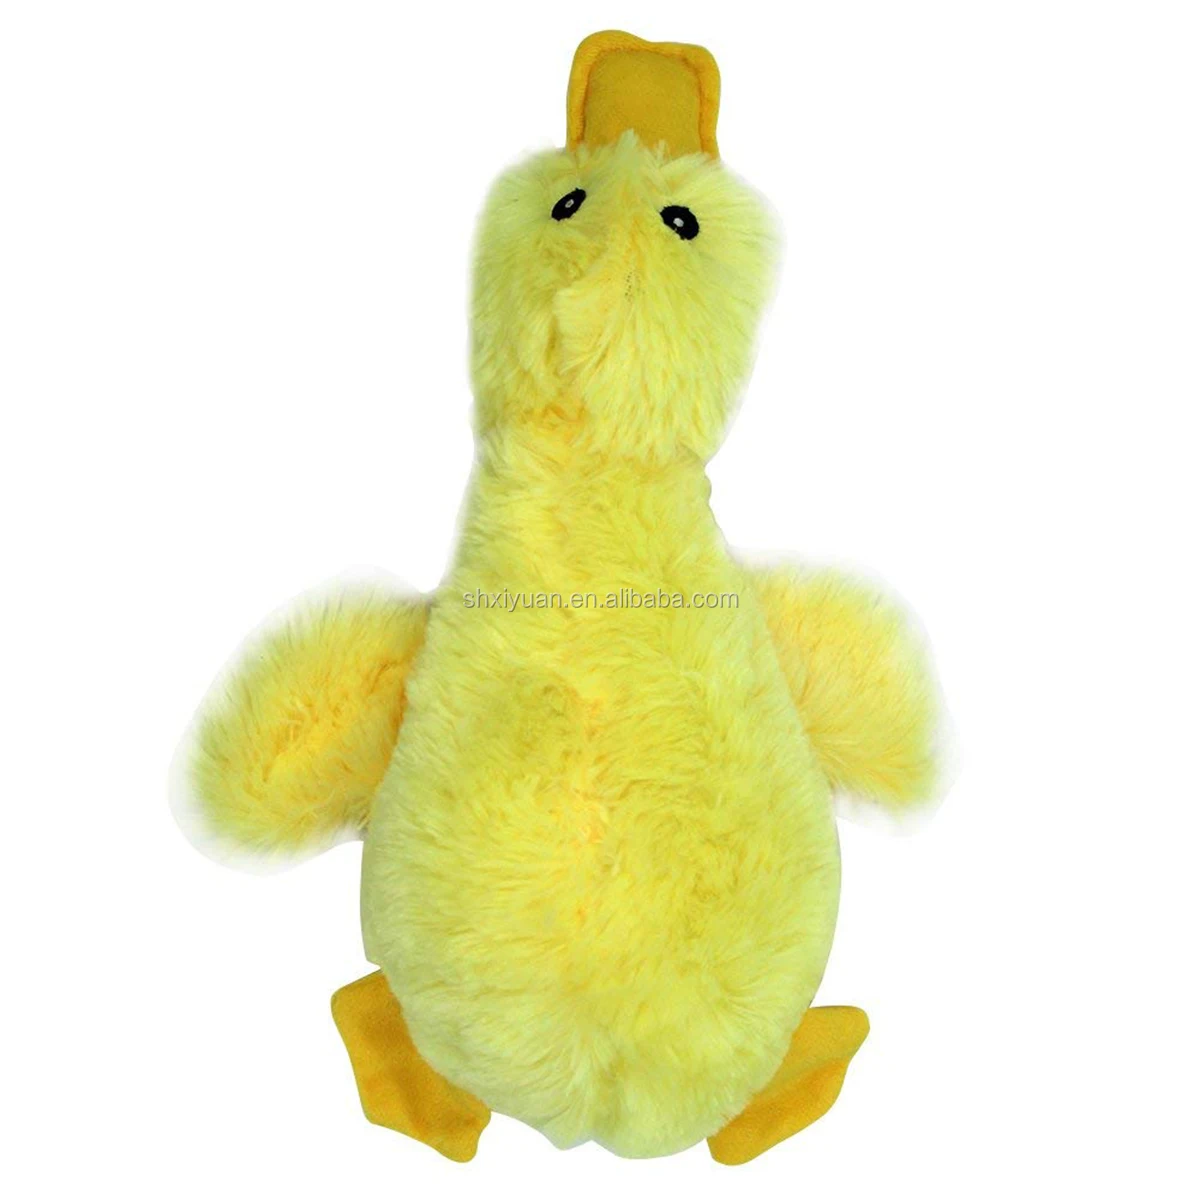 squeaky duck